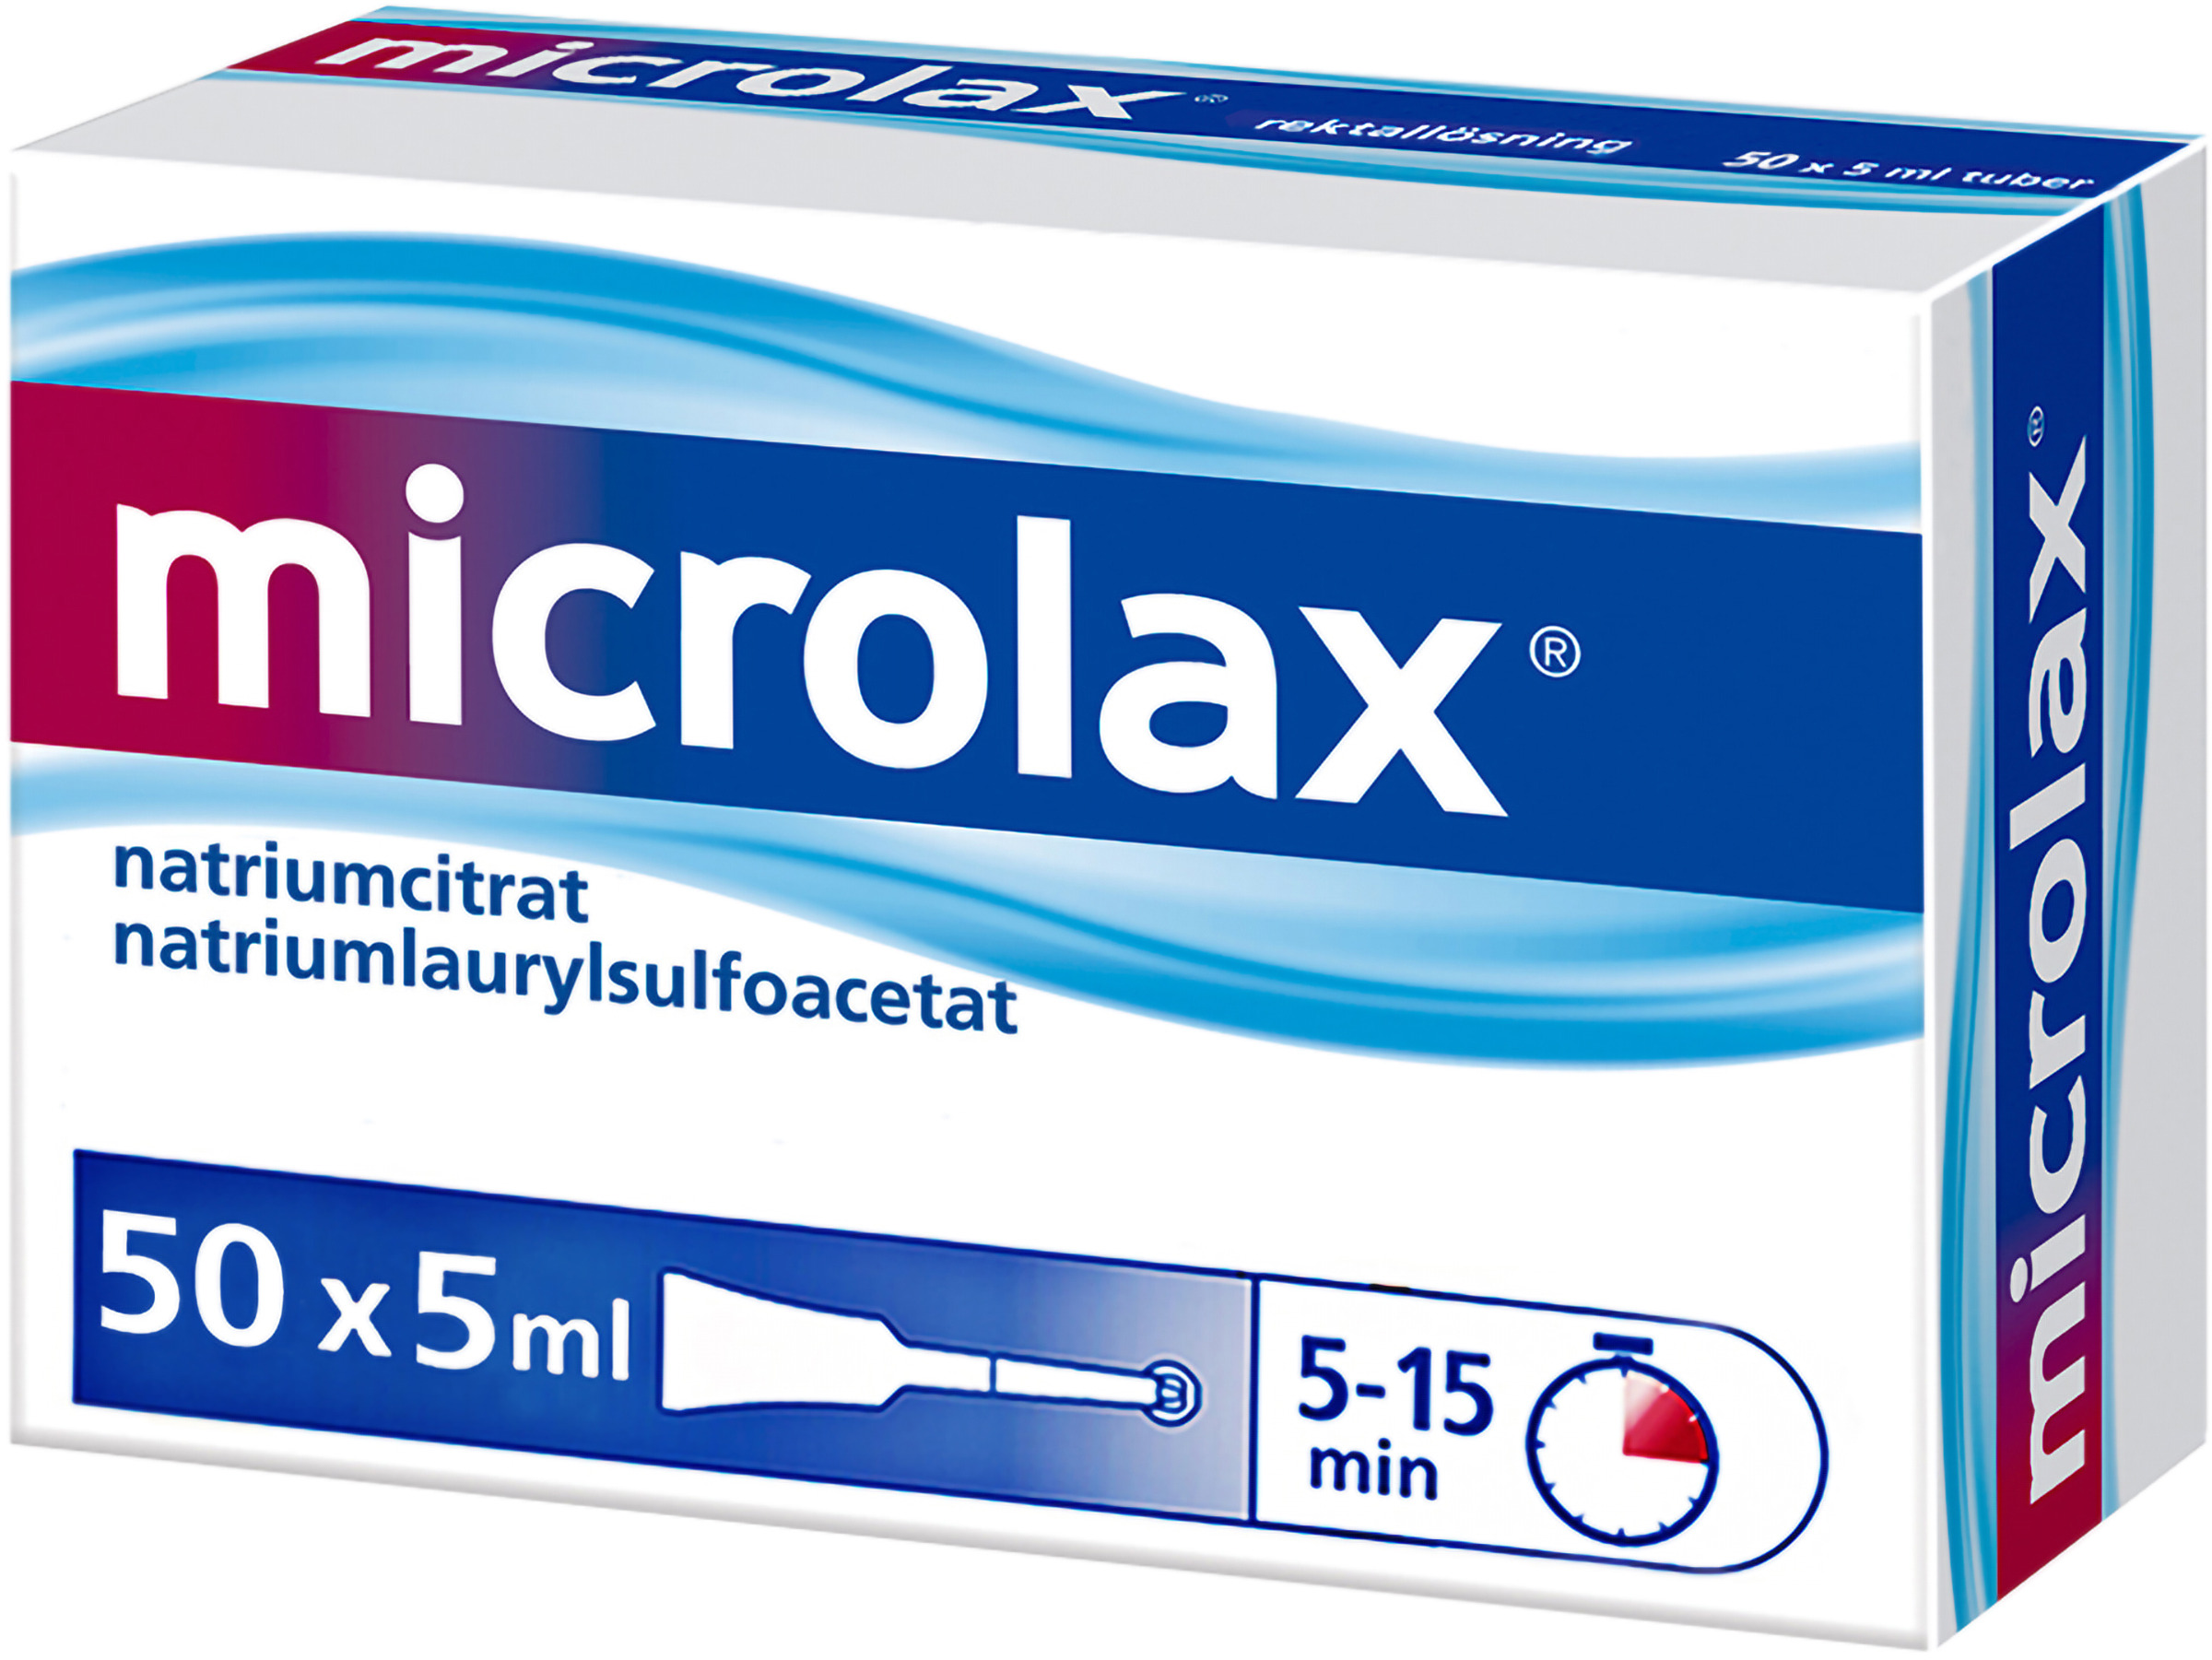 Microlax Microlavemang 5ml 50 st